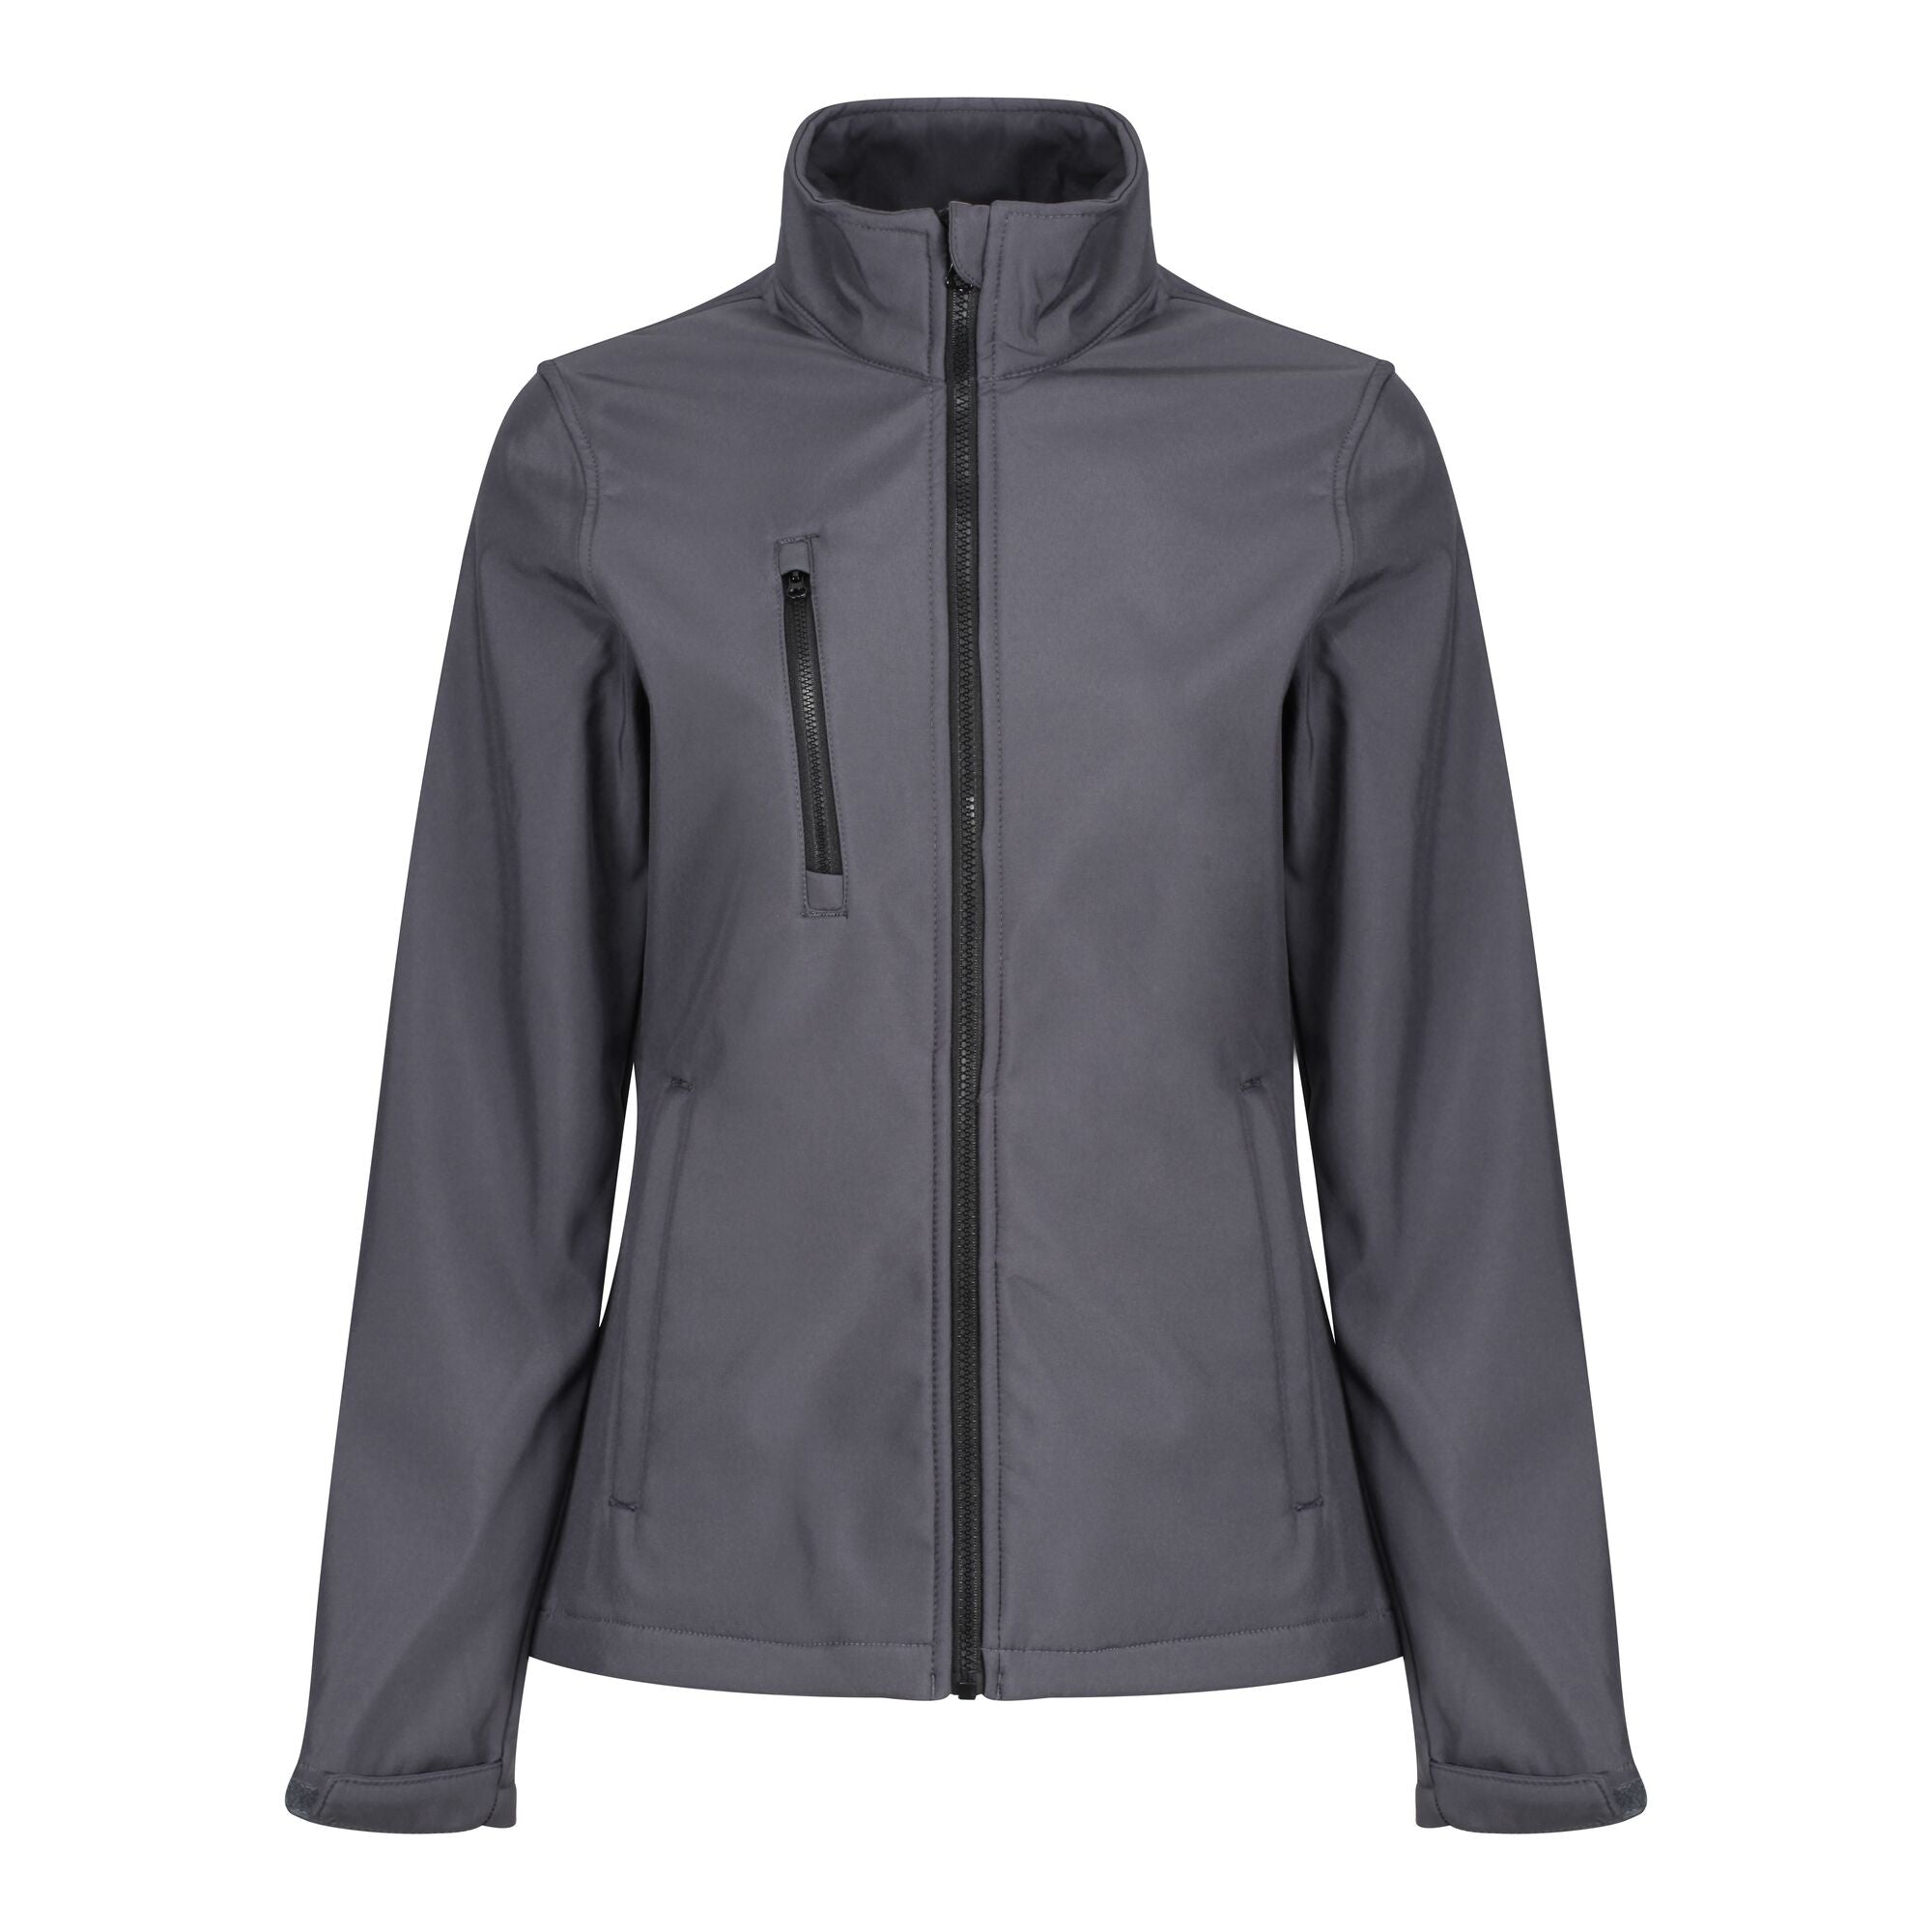 Regatta Ladies Ablaze 3 Layer Softshell Jacket - Grey/Black